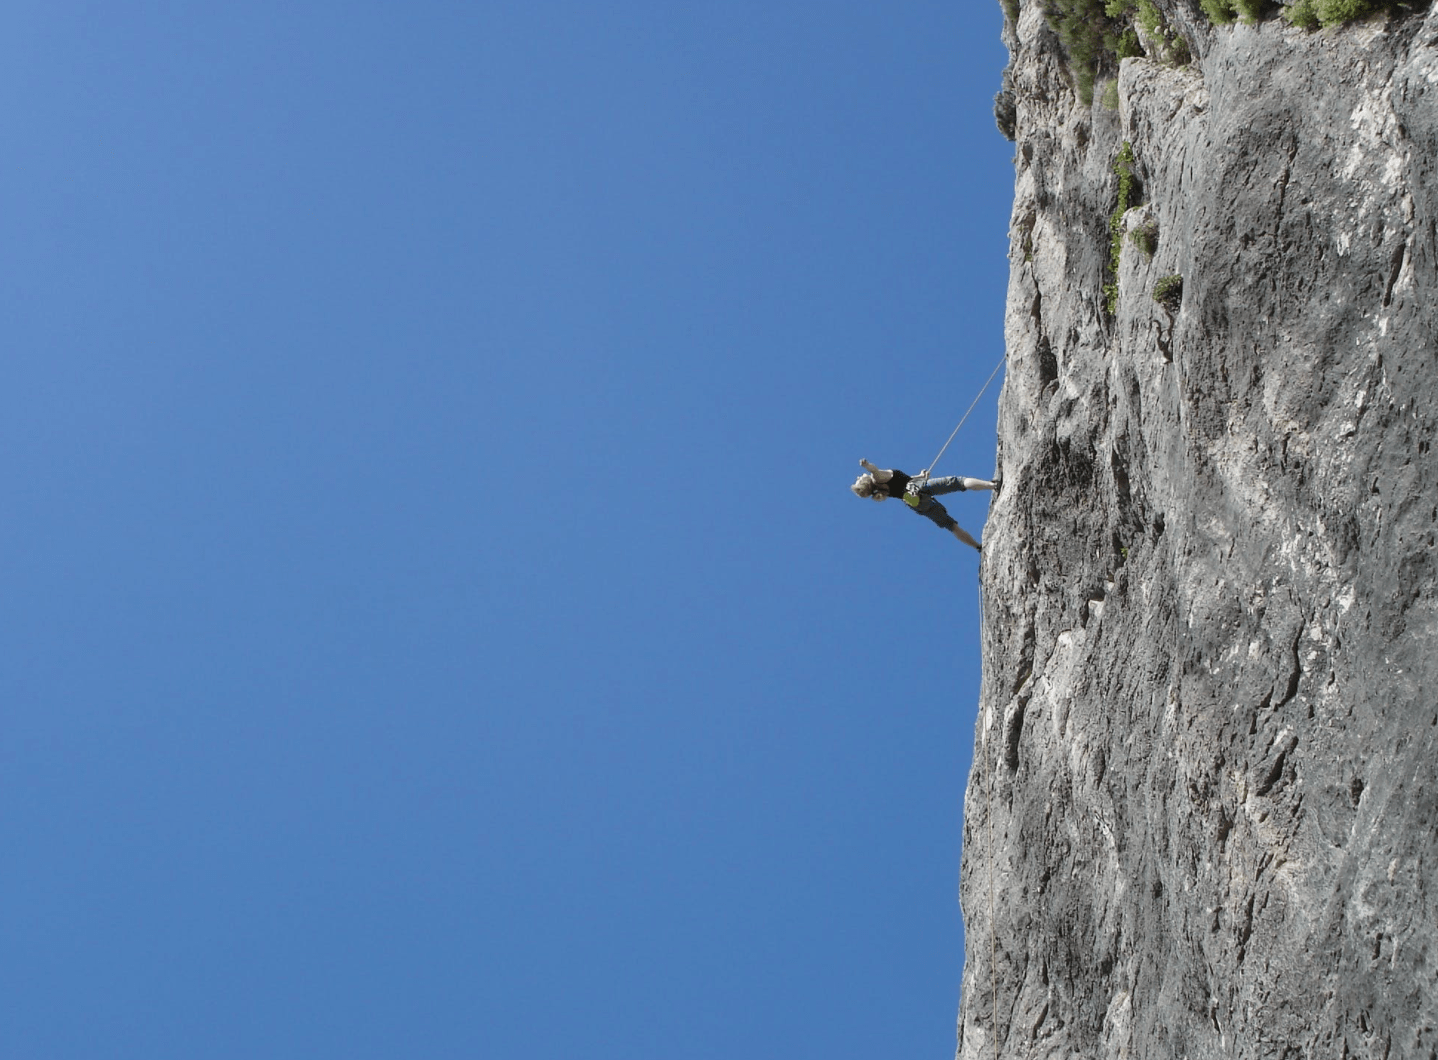 Rock Climbing In UK